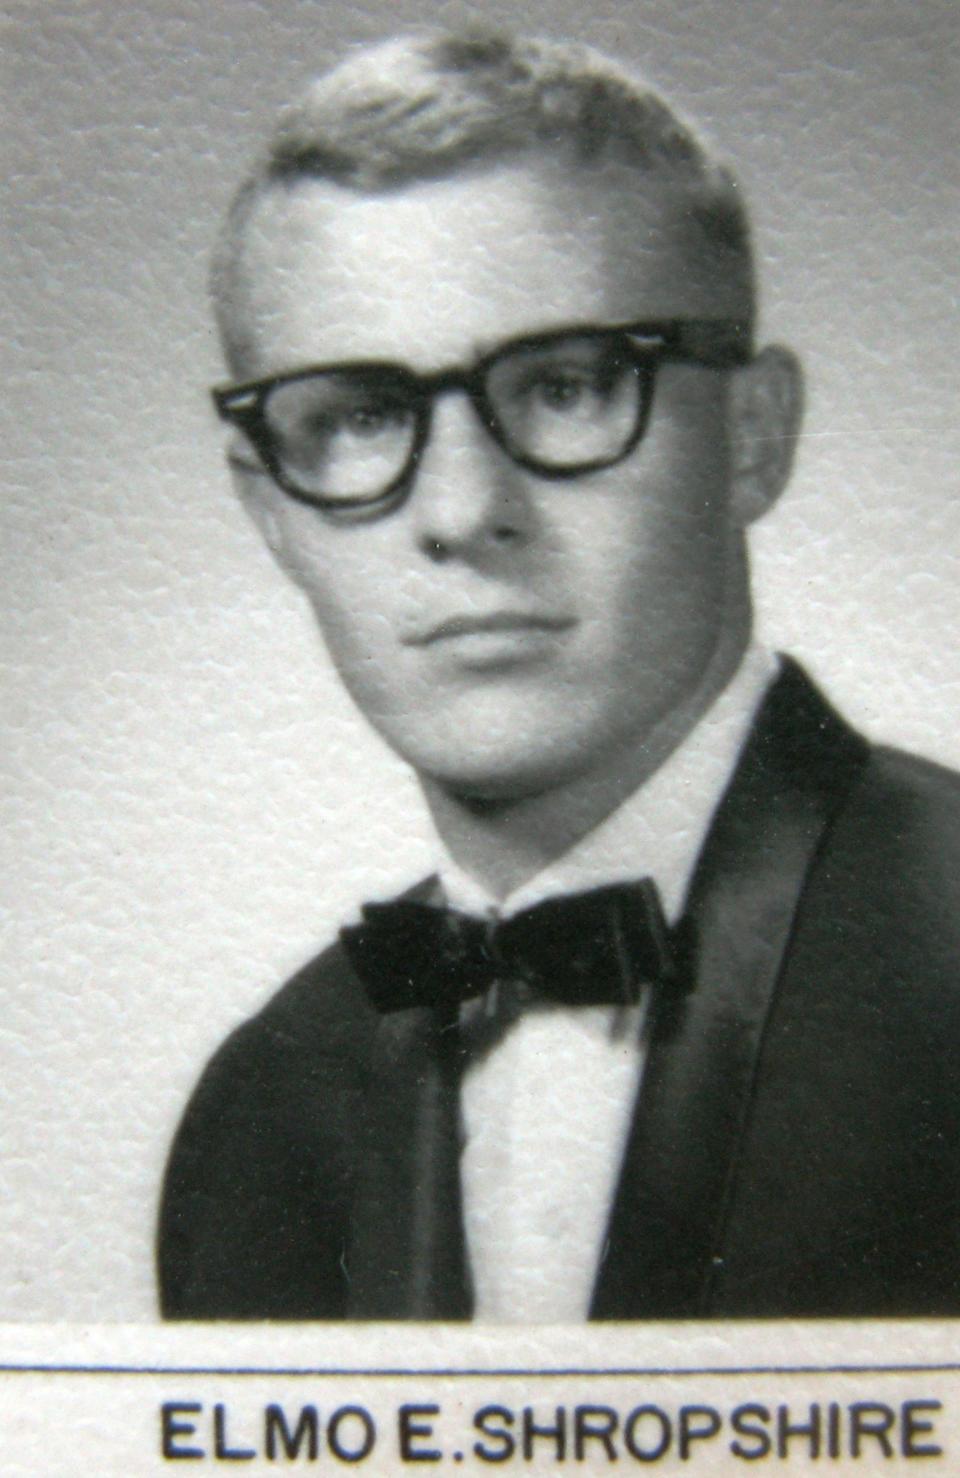 Elmo Shropshire in his 1964 class photo from Auburn University.